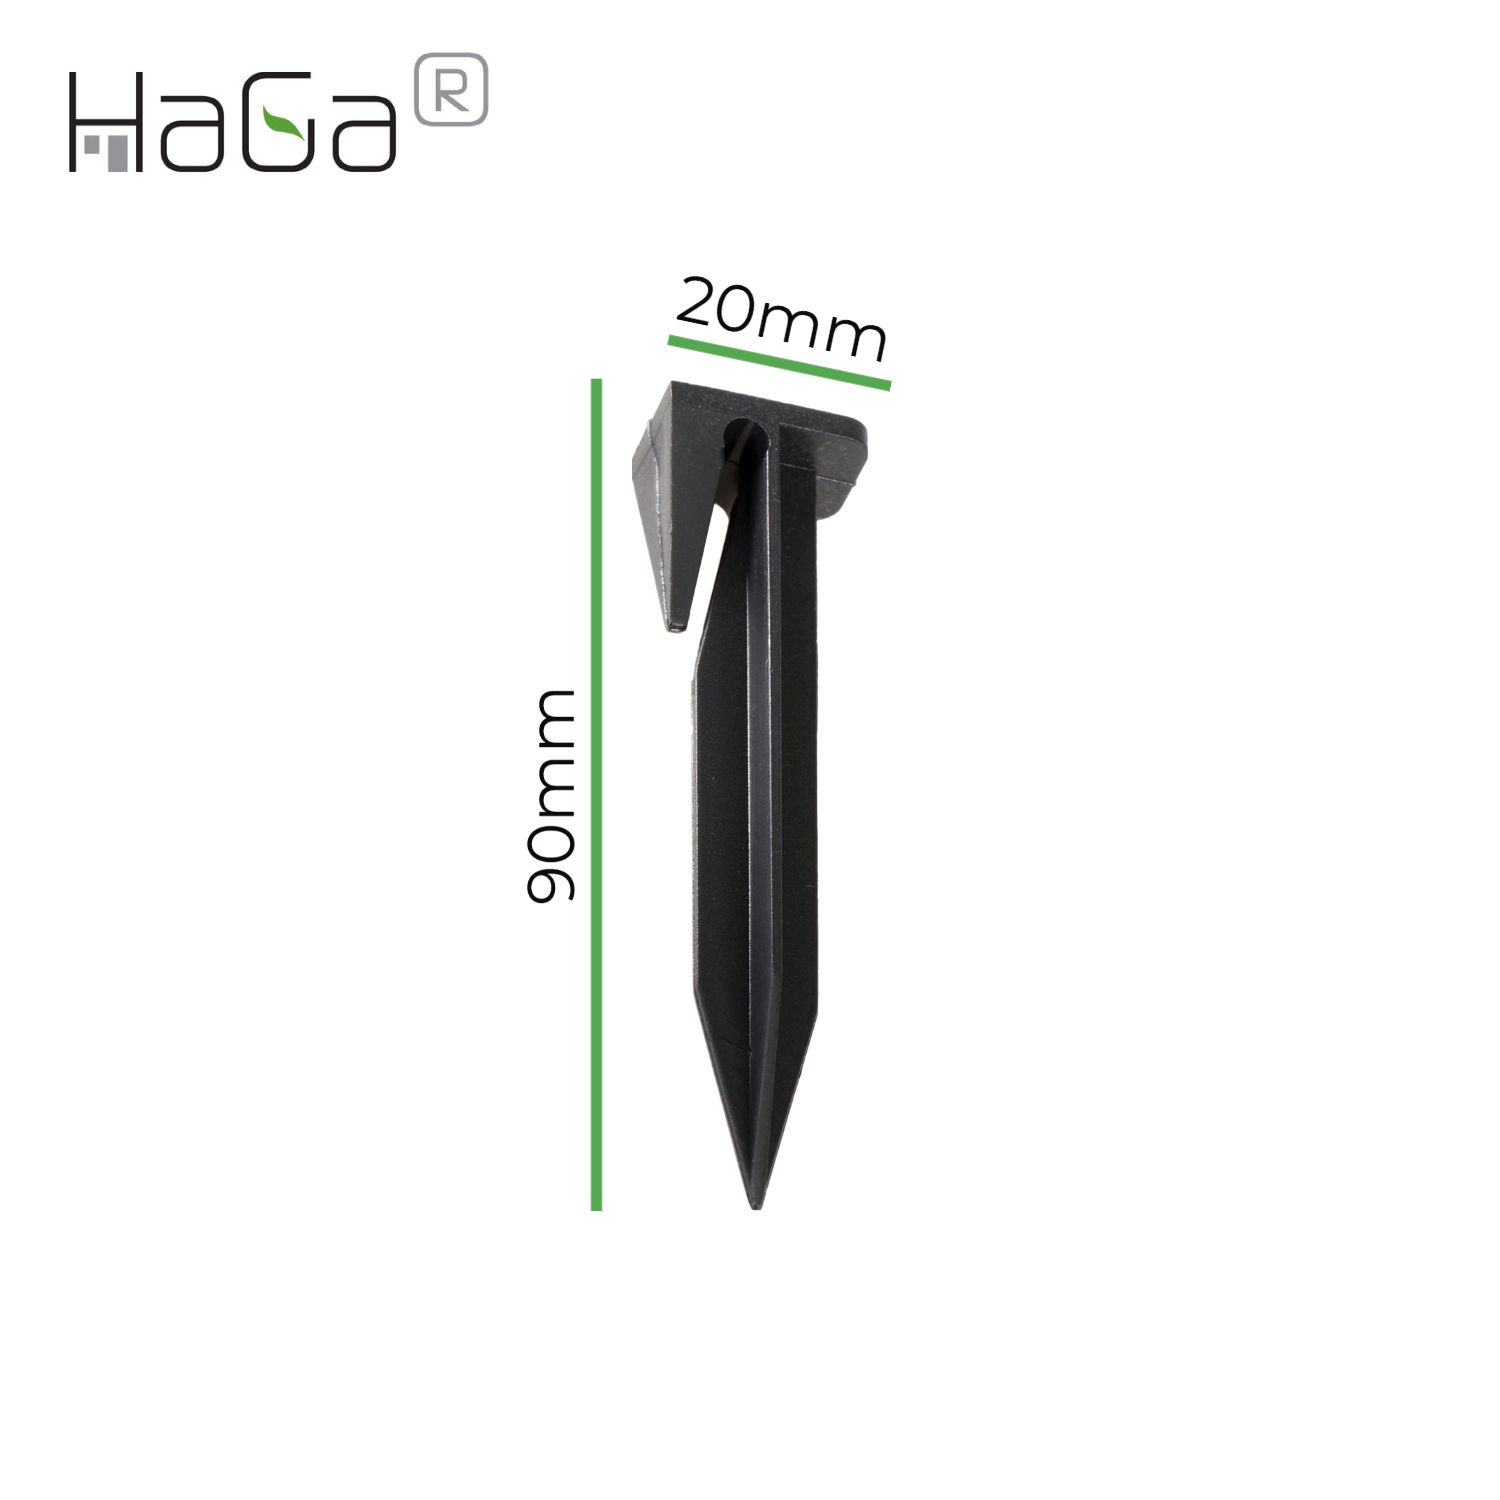 HaGa® Erdnägel für Mähroboter 10 Stück Begrenzugskabel-Erdhaken